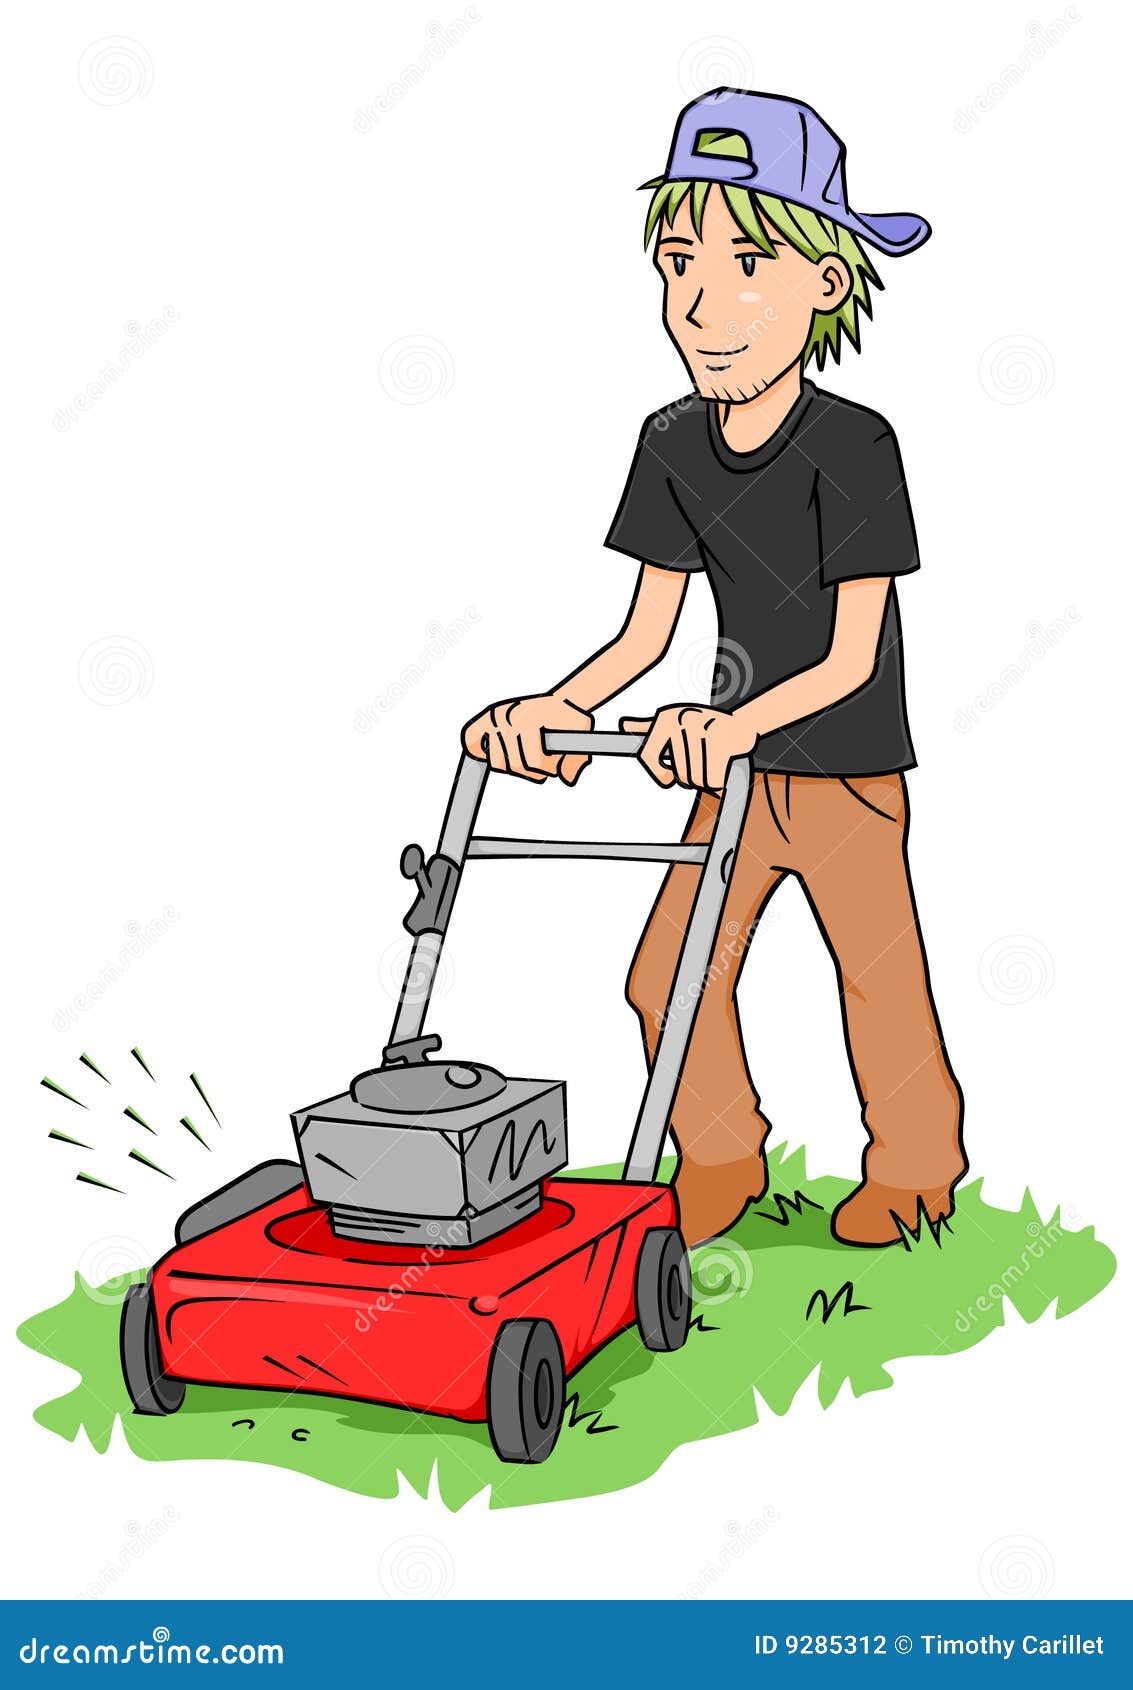 clipart of man cutting grass - photo #12